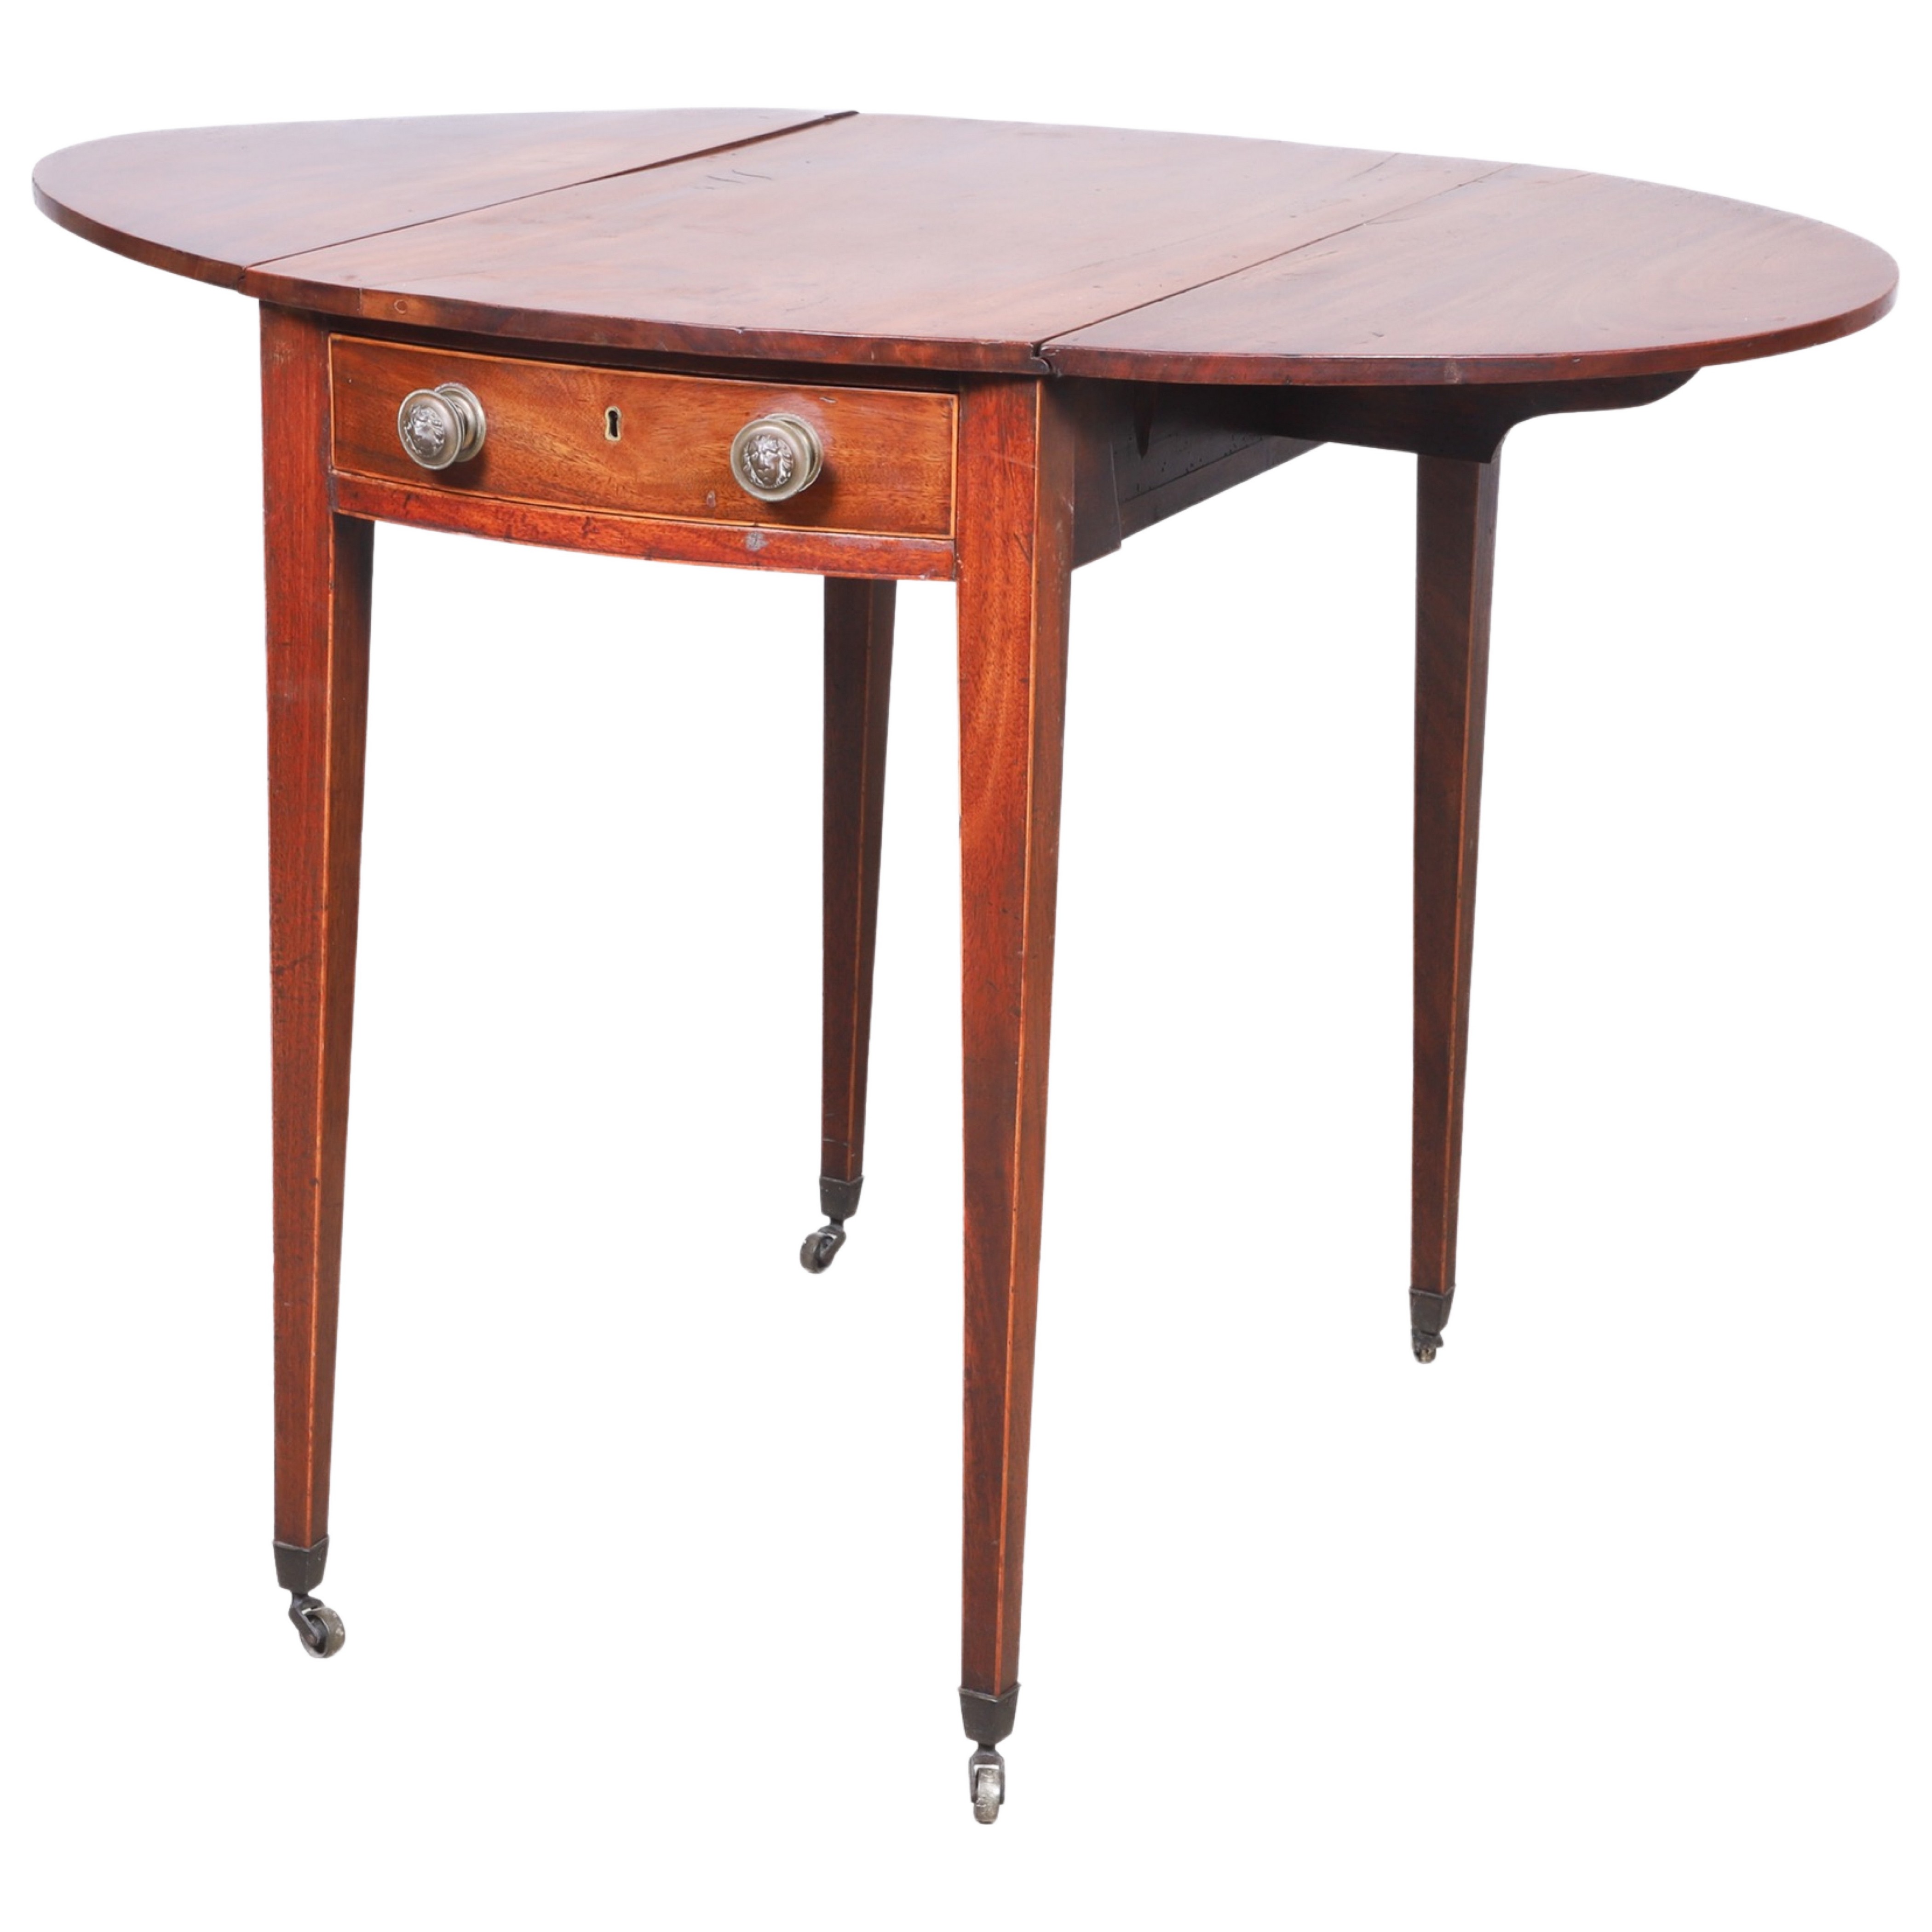 George III mahogany pembroke table,